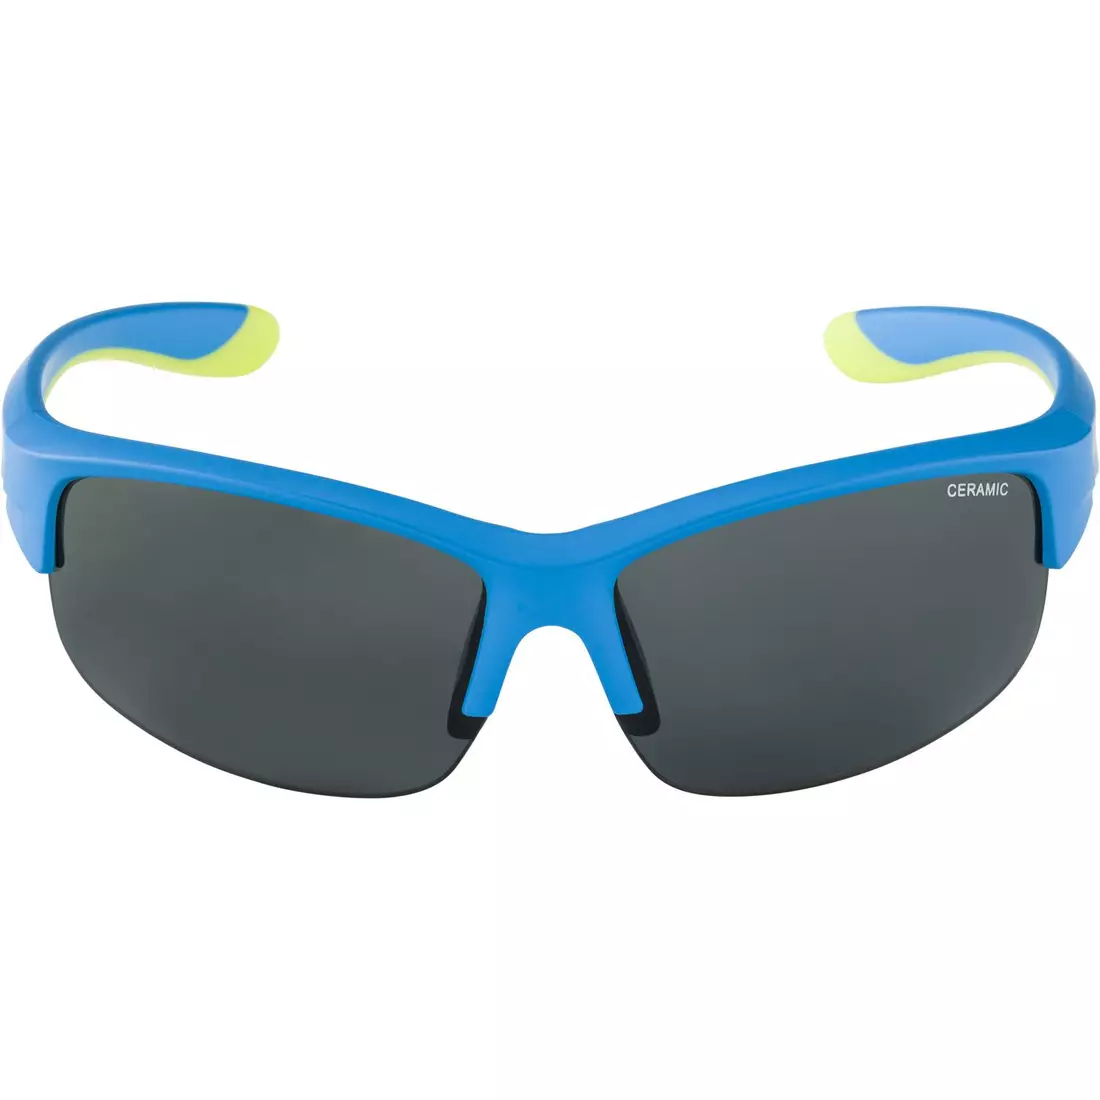 ALPINA JUNIOR FLEXXY YOUTH HR Kinder Fahrrad-/Sportbrille, blue-lime matt